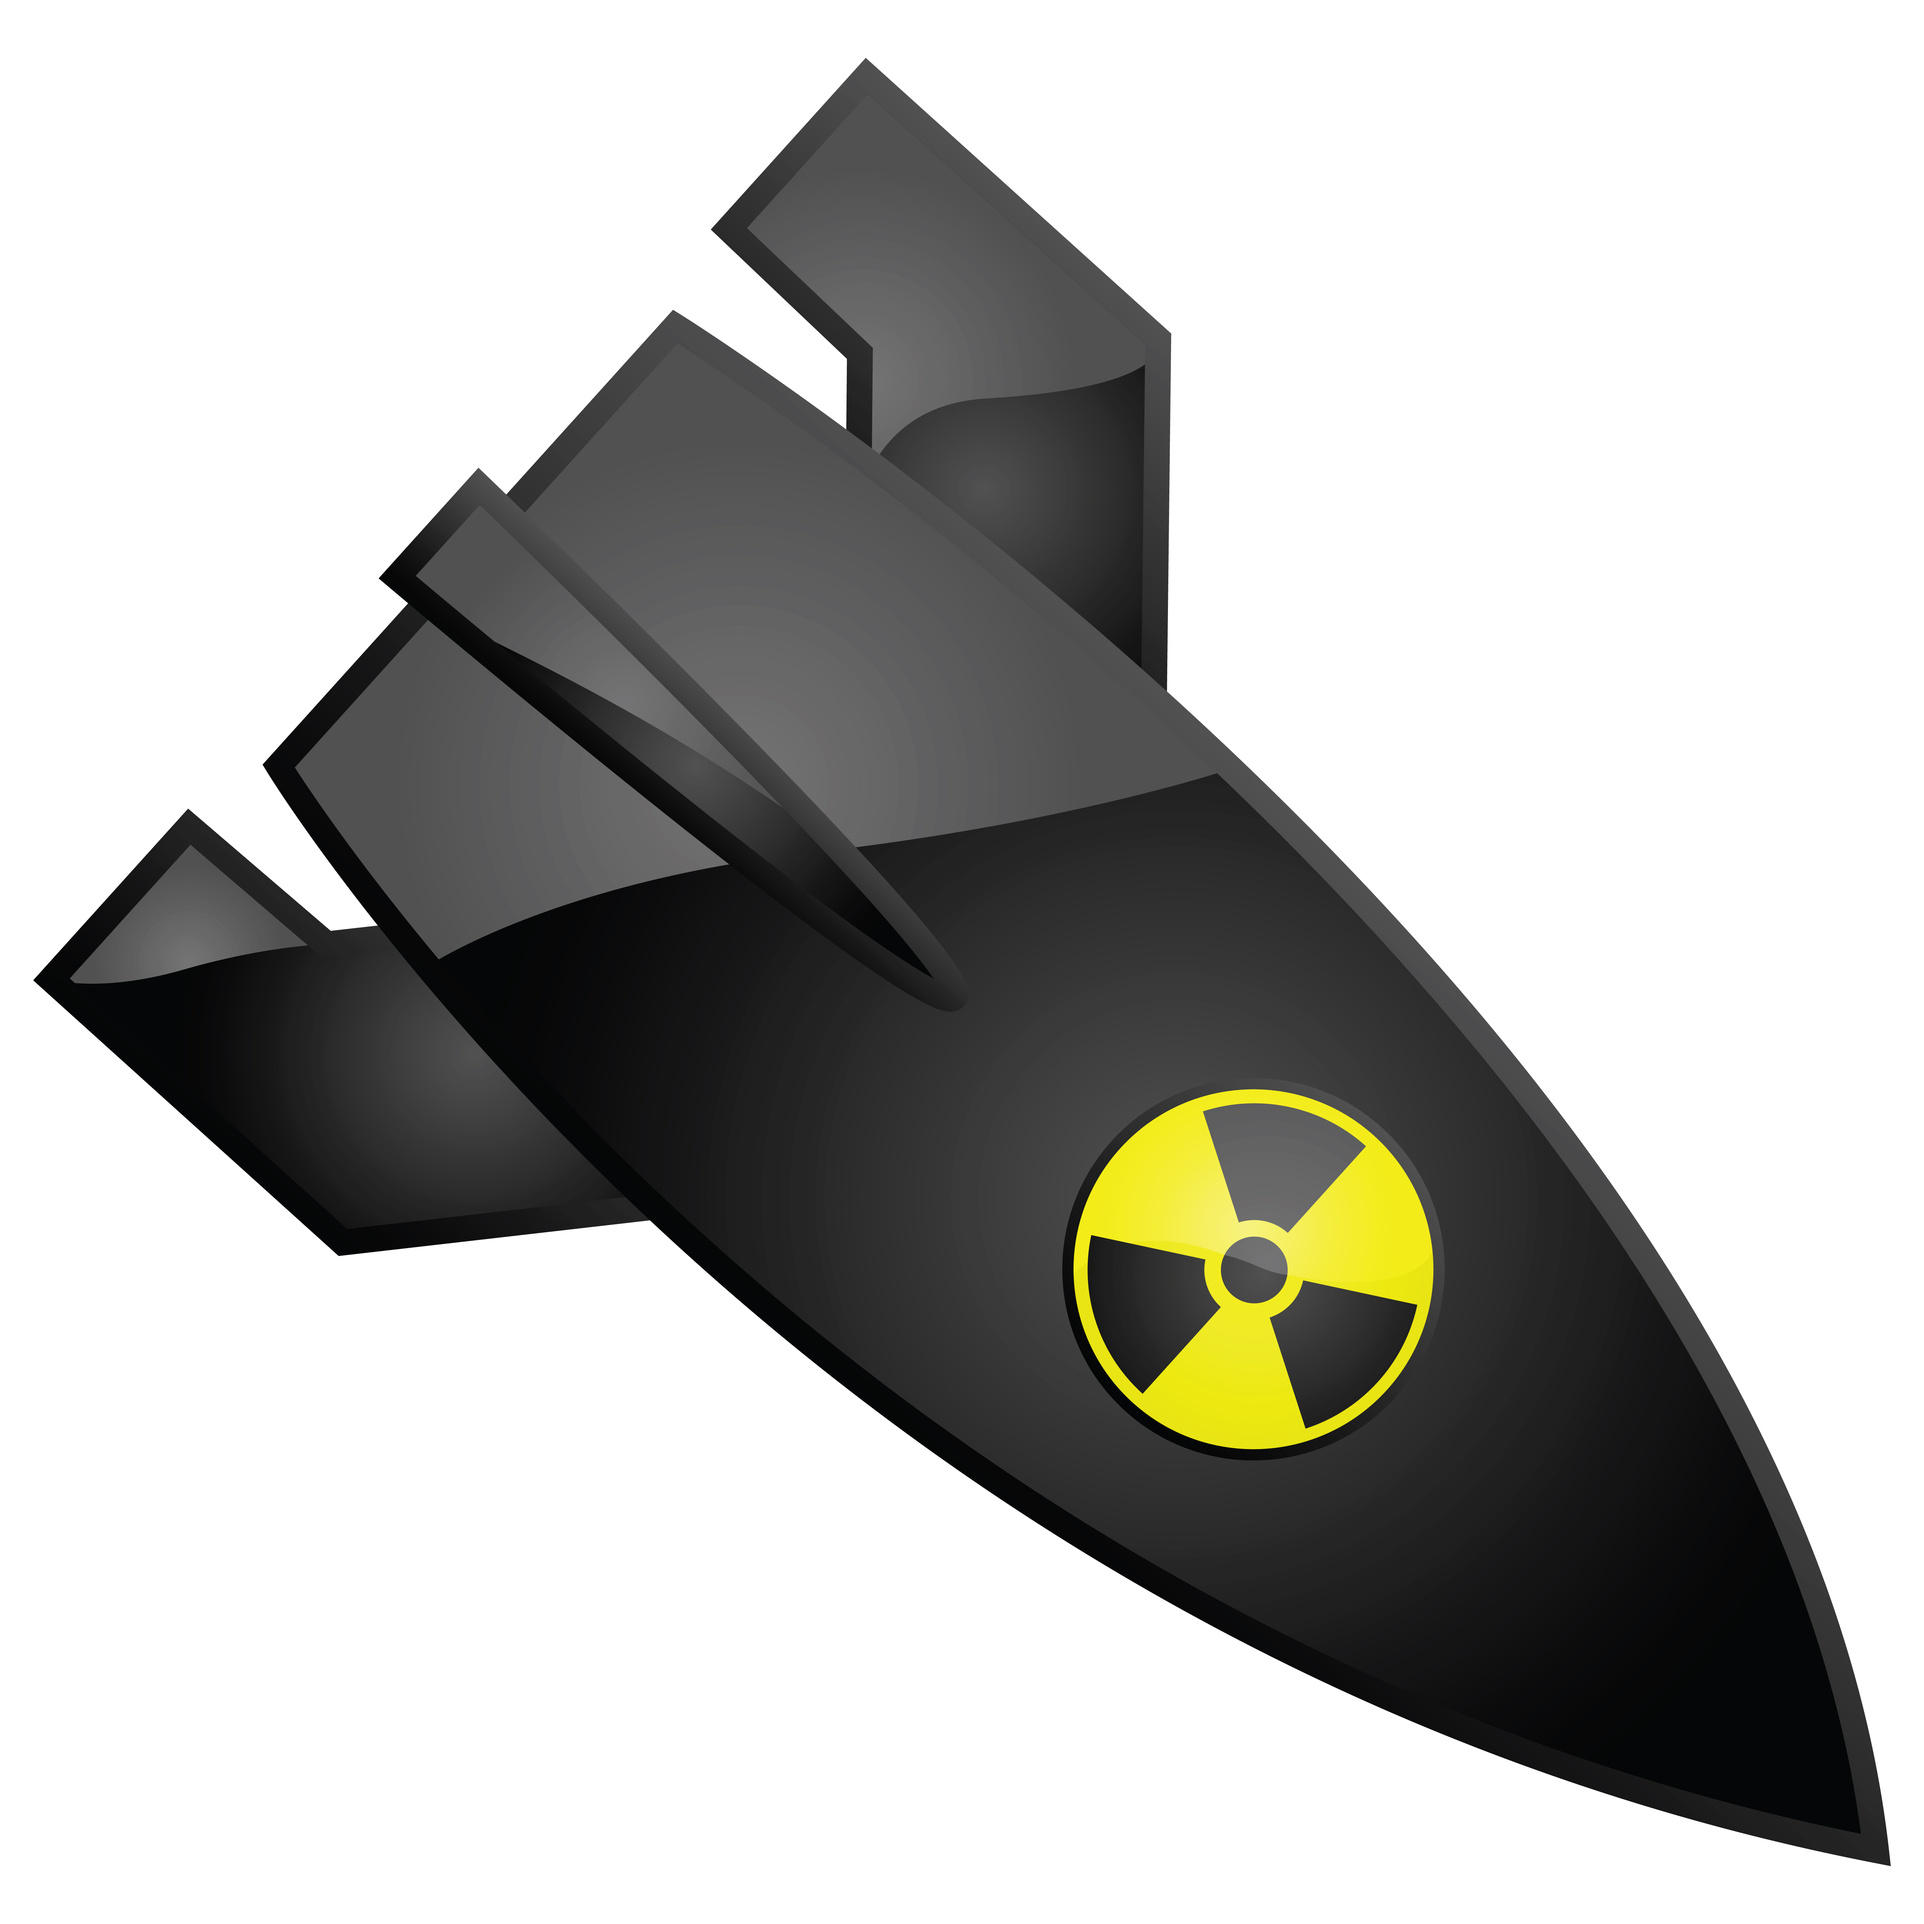 nuke clipart cruise missile